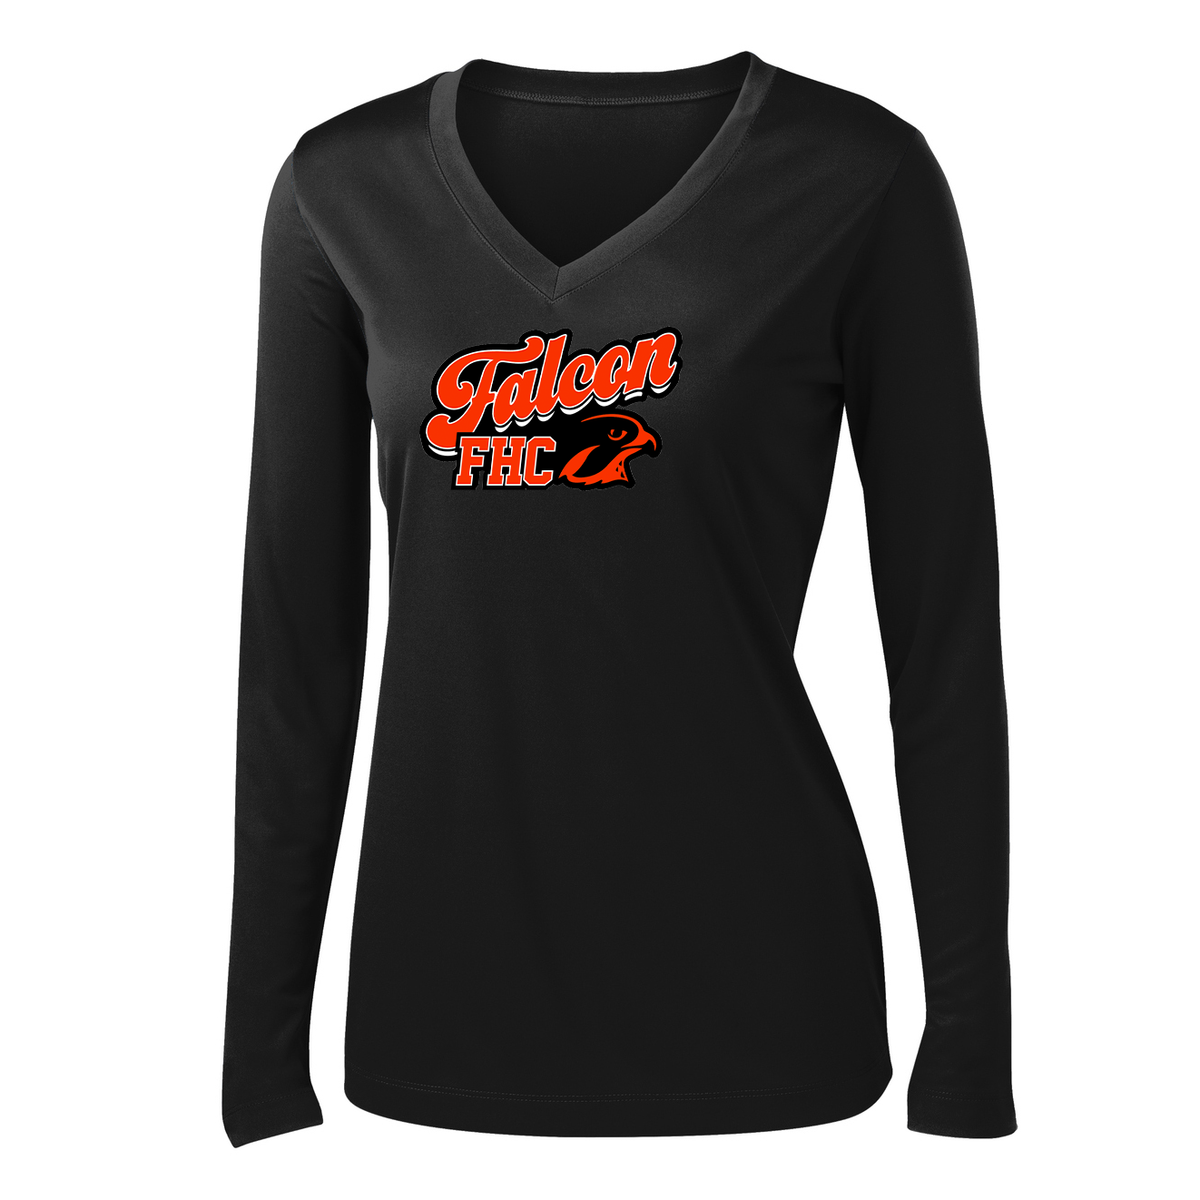 Falcons Field Hockey Club Women's Long Sleeve Performance Shirt